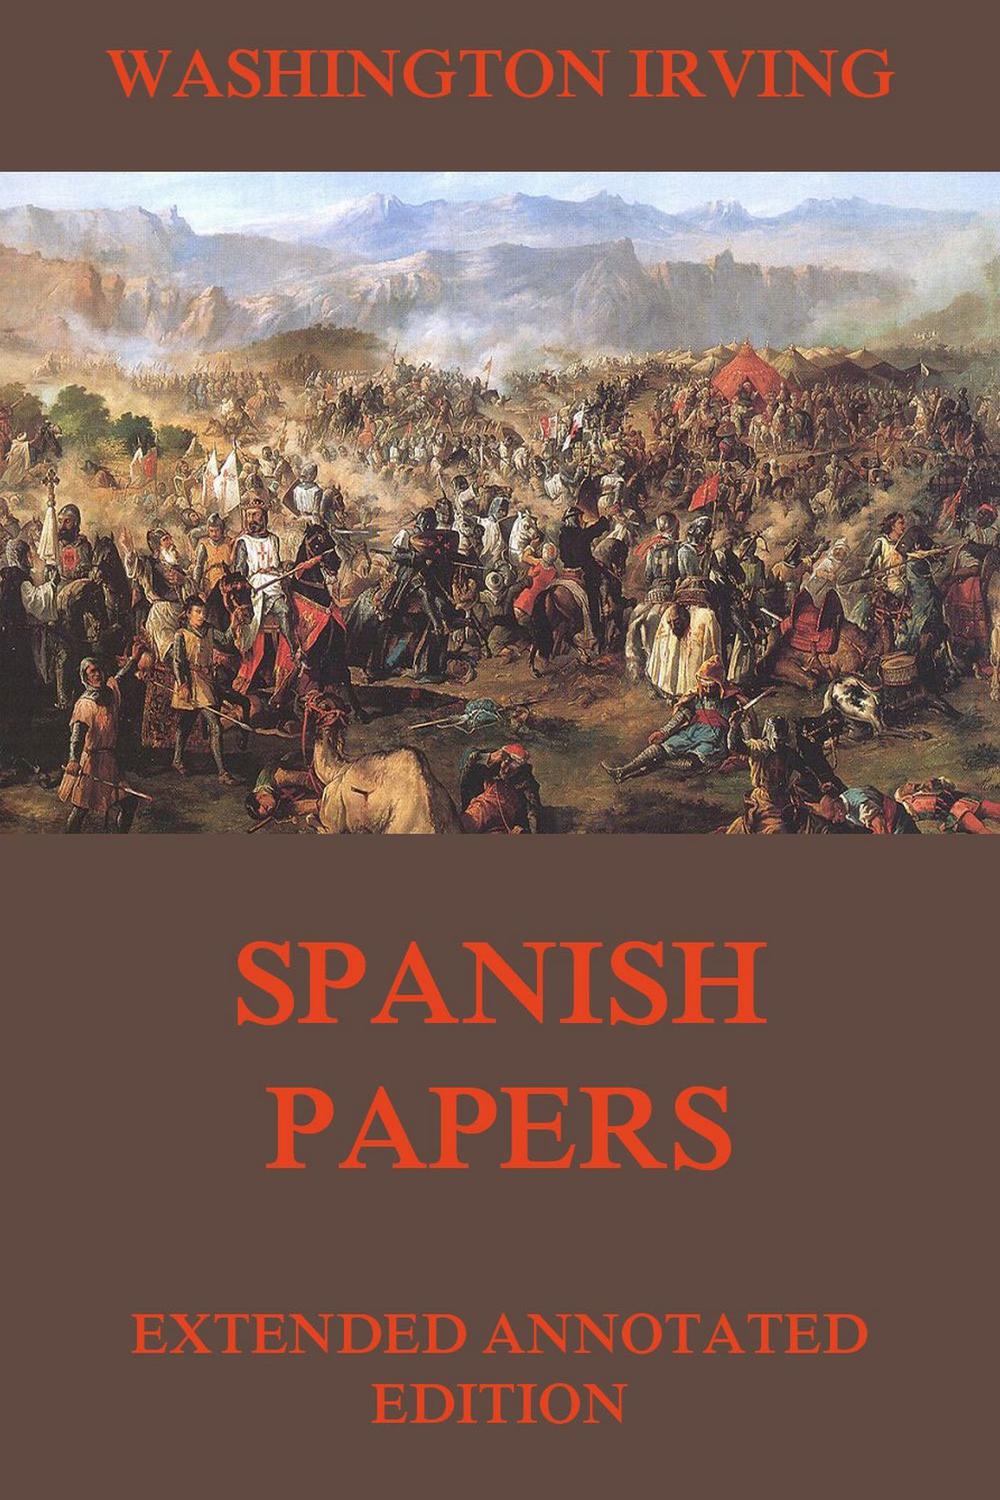 Spanish Papers - Washington Irving